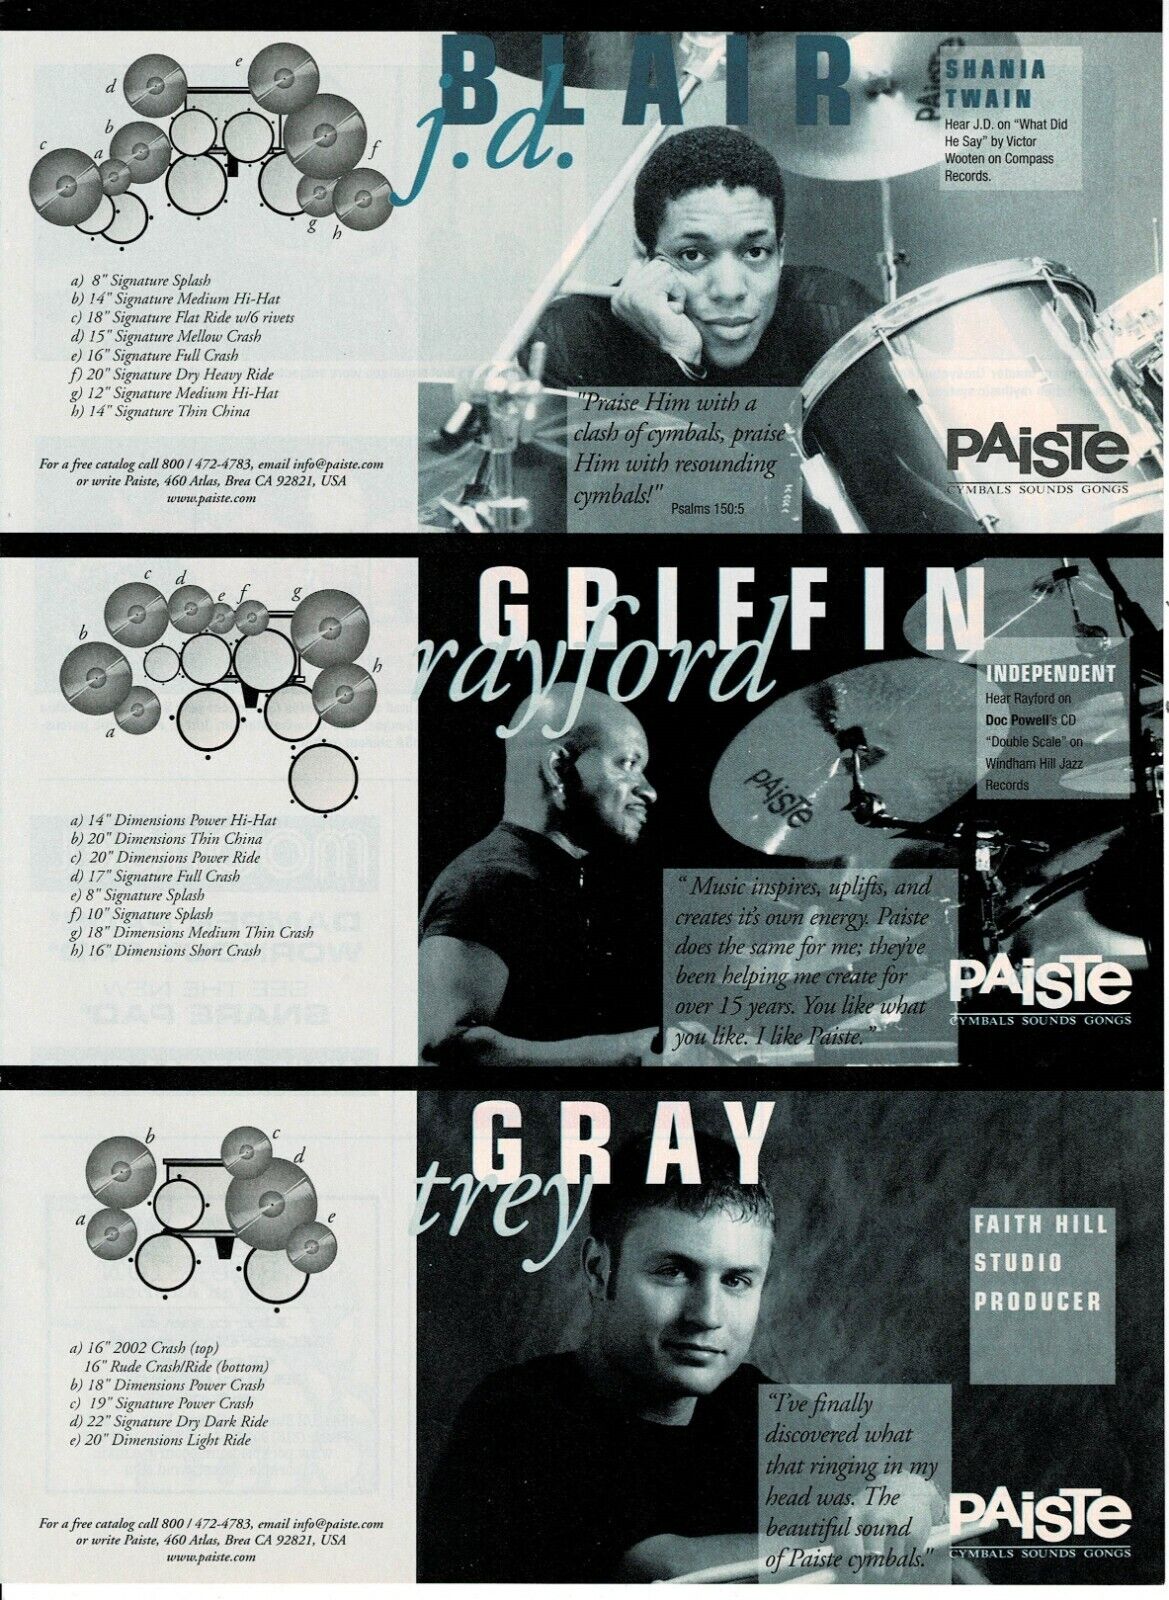 PAISTE CYMBALS - J.D. Blair / Rayford Griffin / Trey Gray - 2001 Print Ad